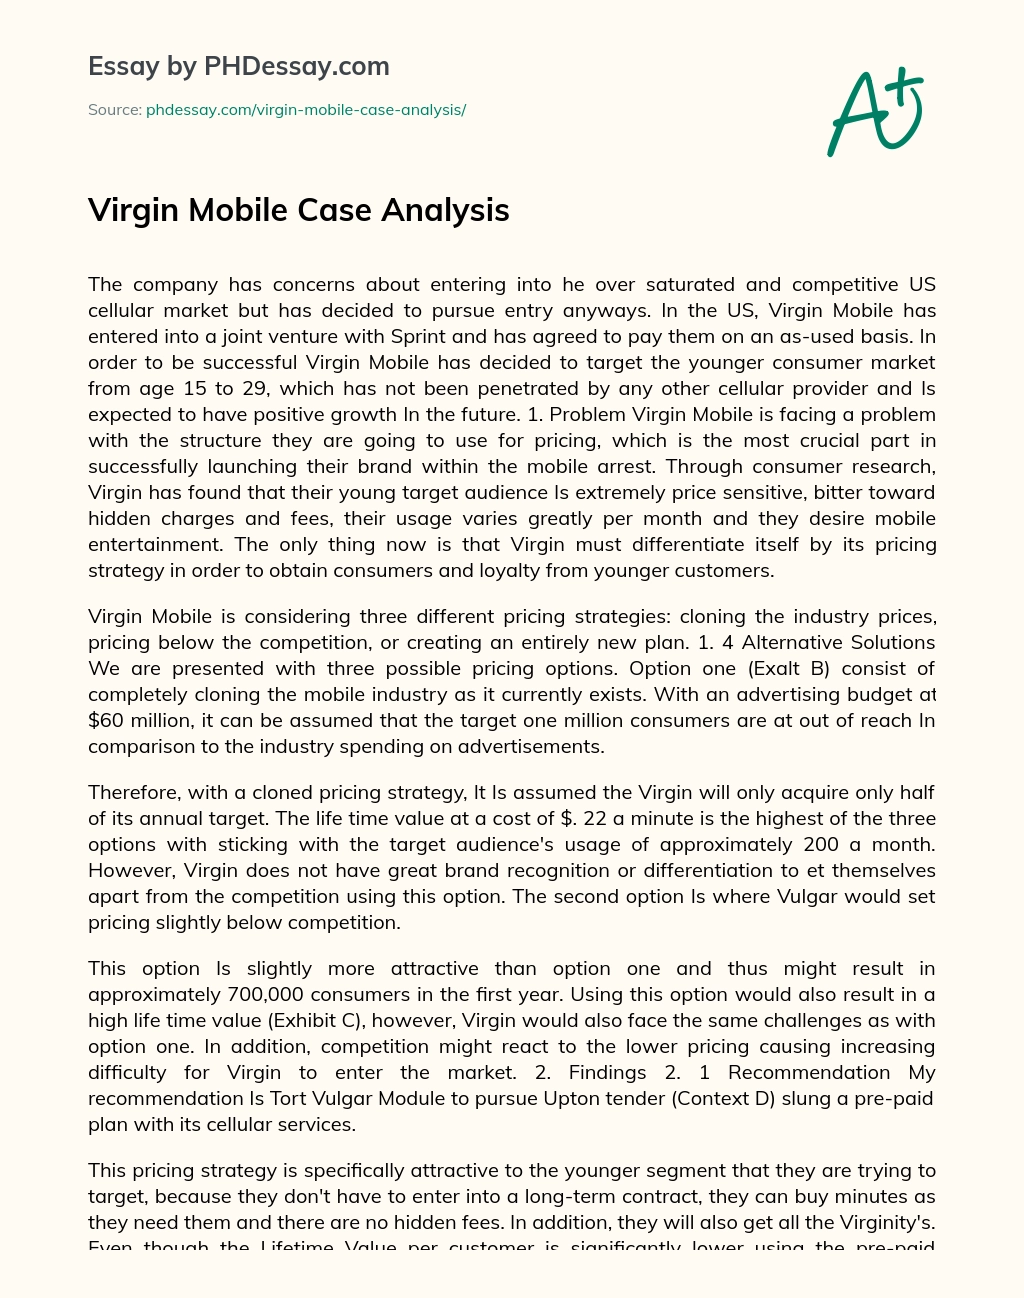 Virgin Mobile Case Analysis essay